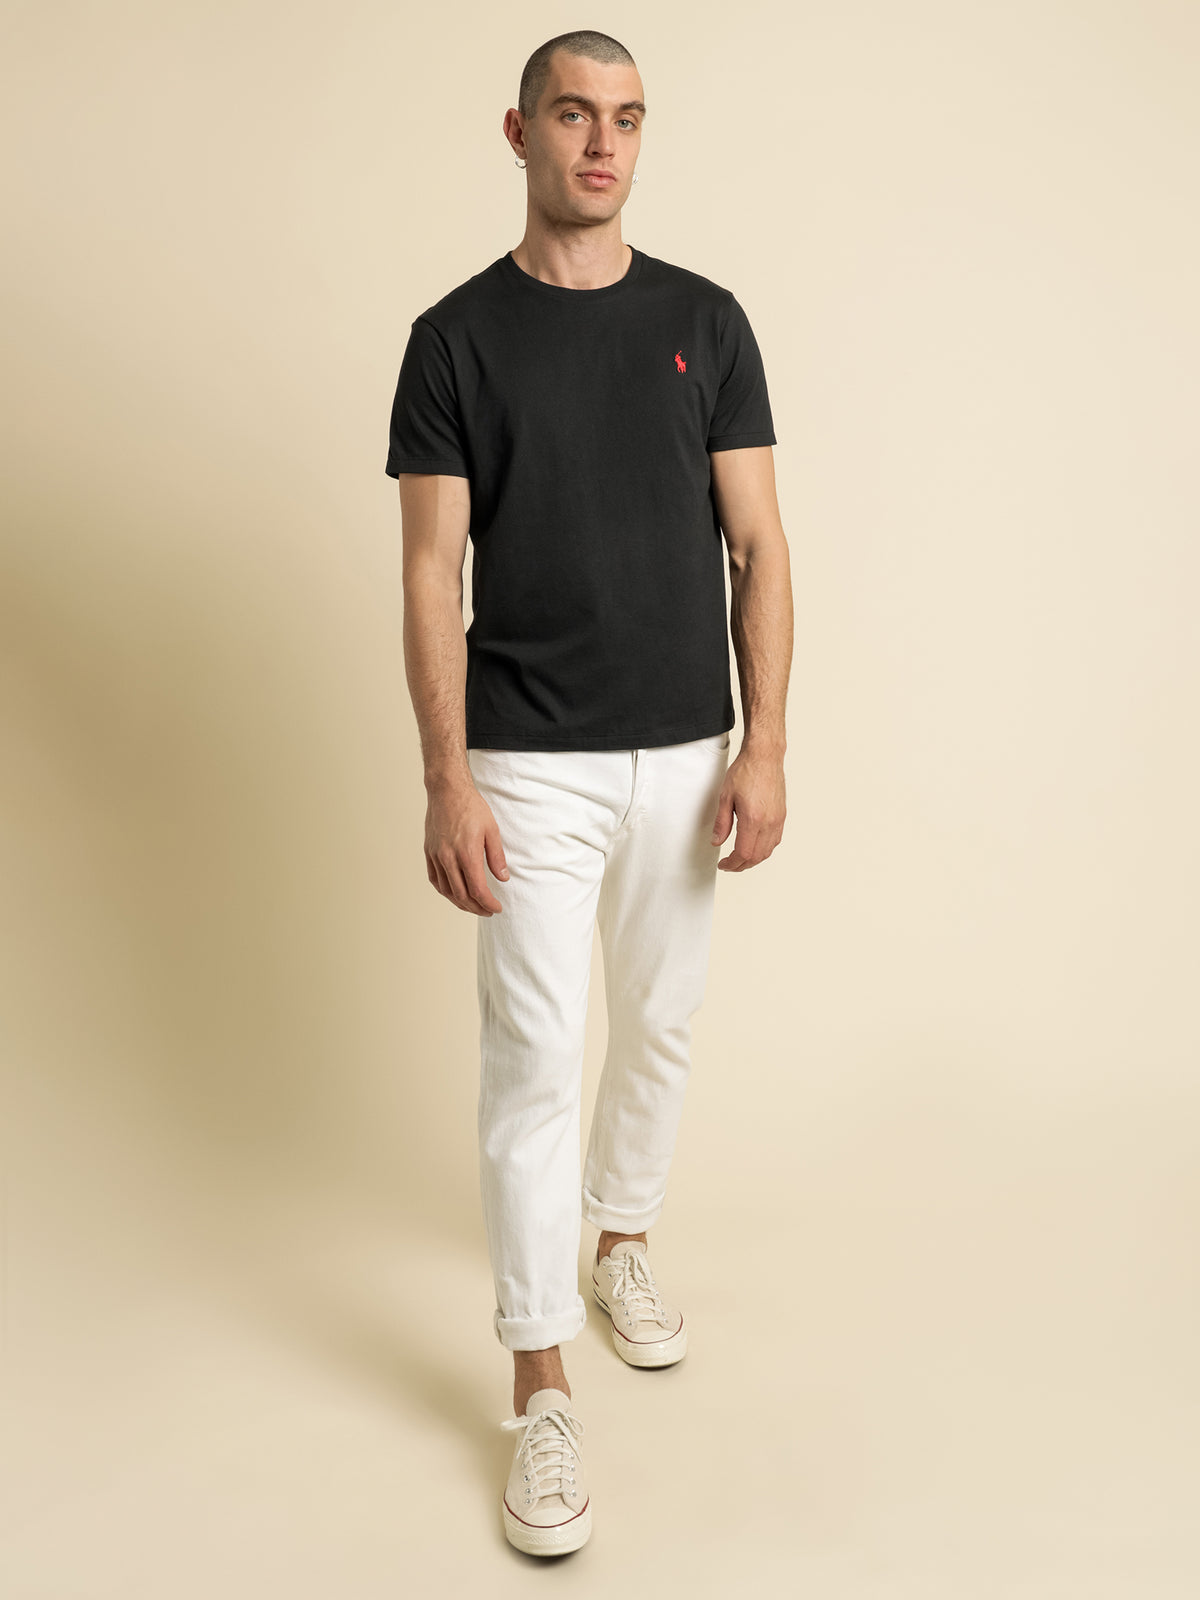 Custom Slim Fit Shirt in Black